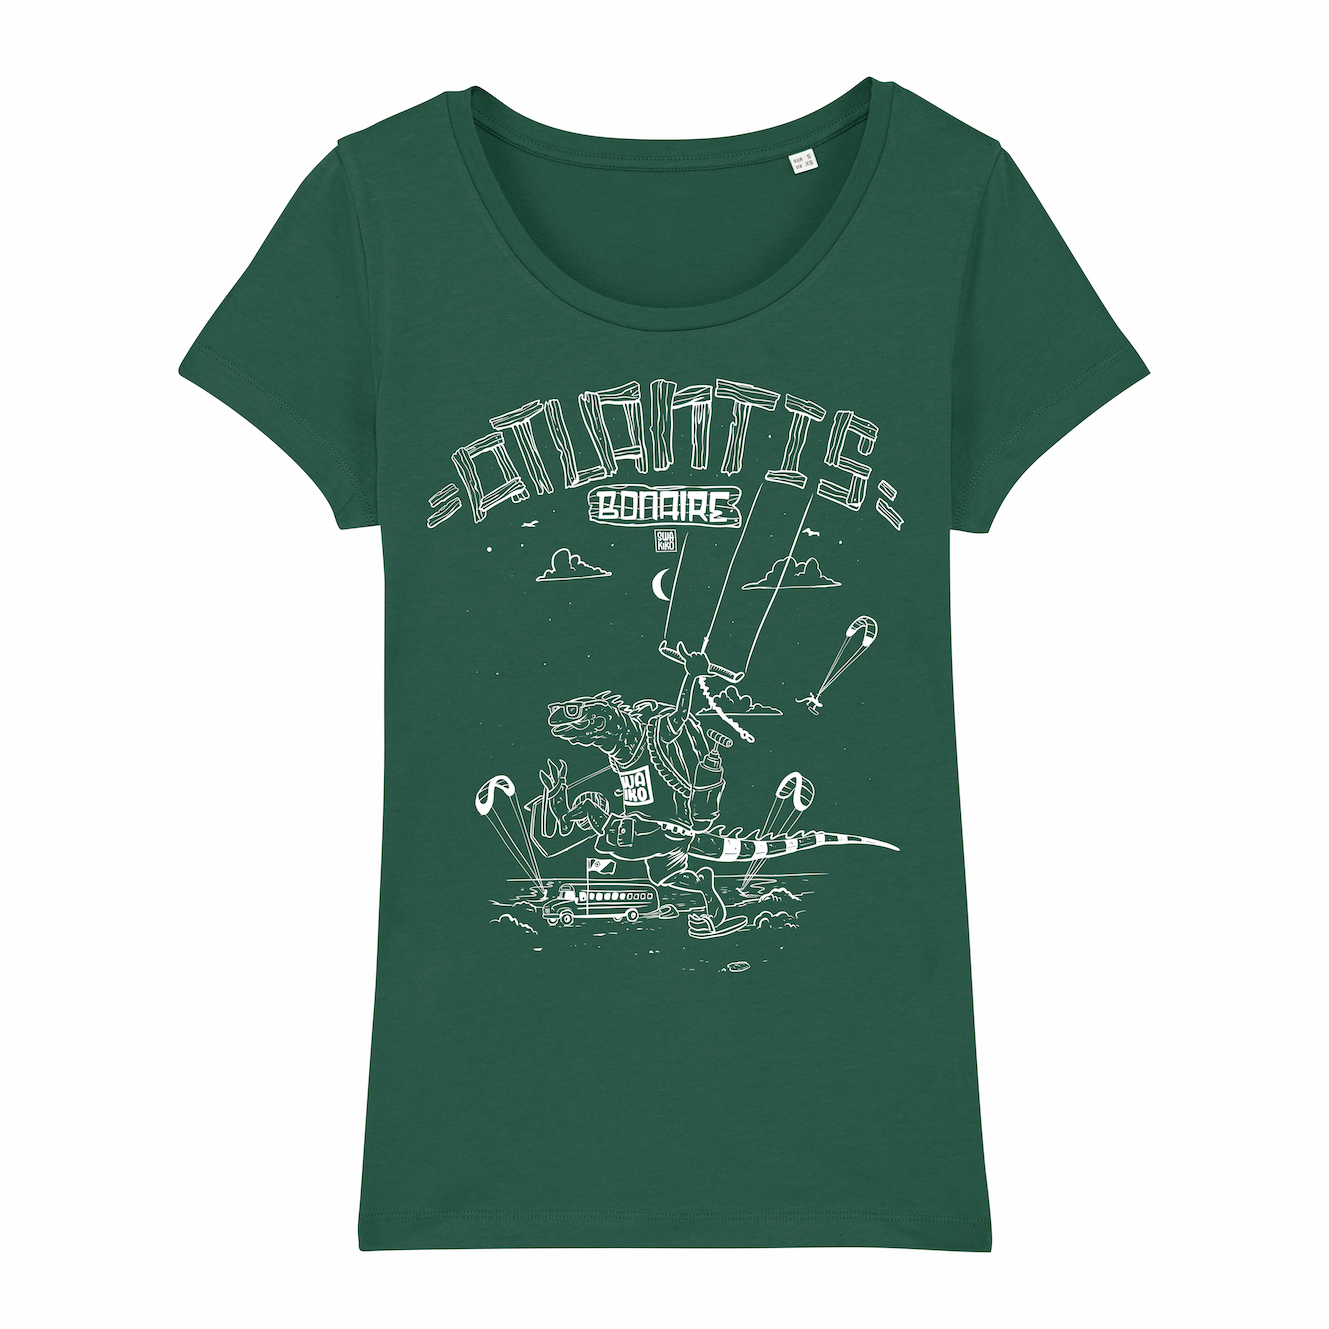 Atlantis Bonaire Kite T-shirt women green